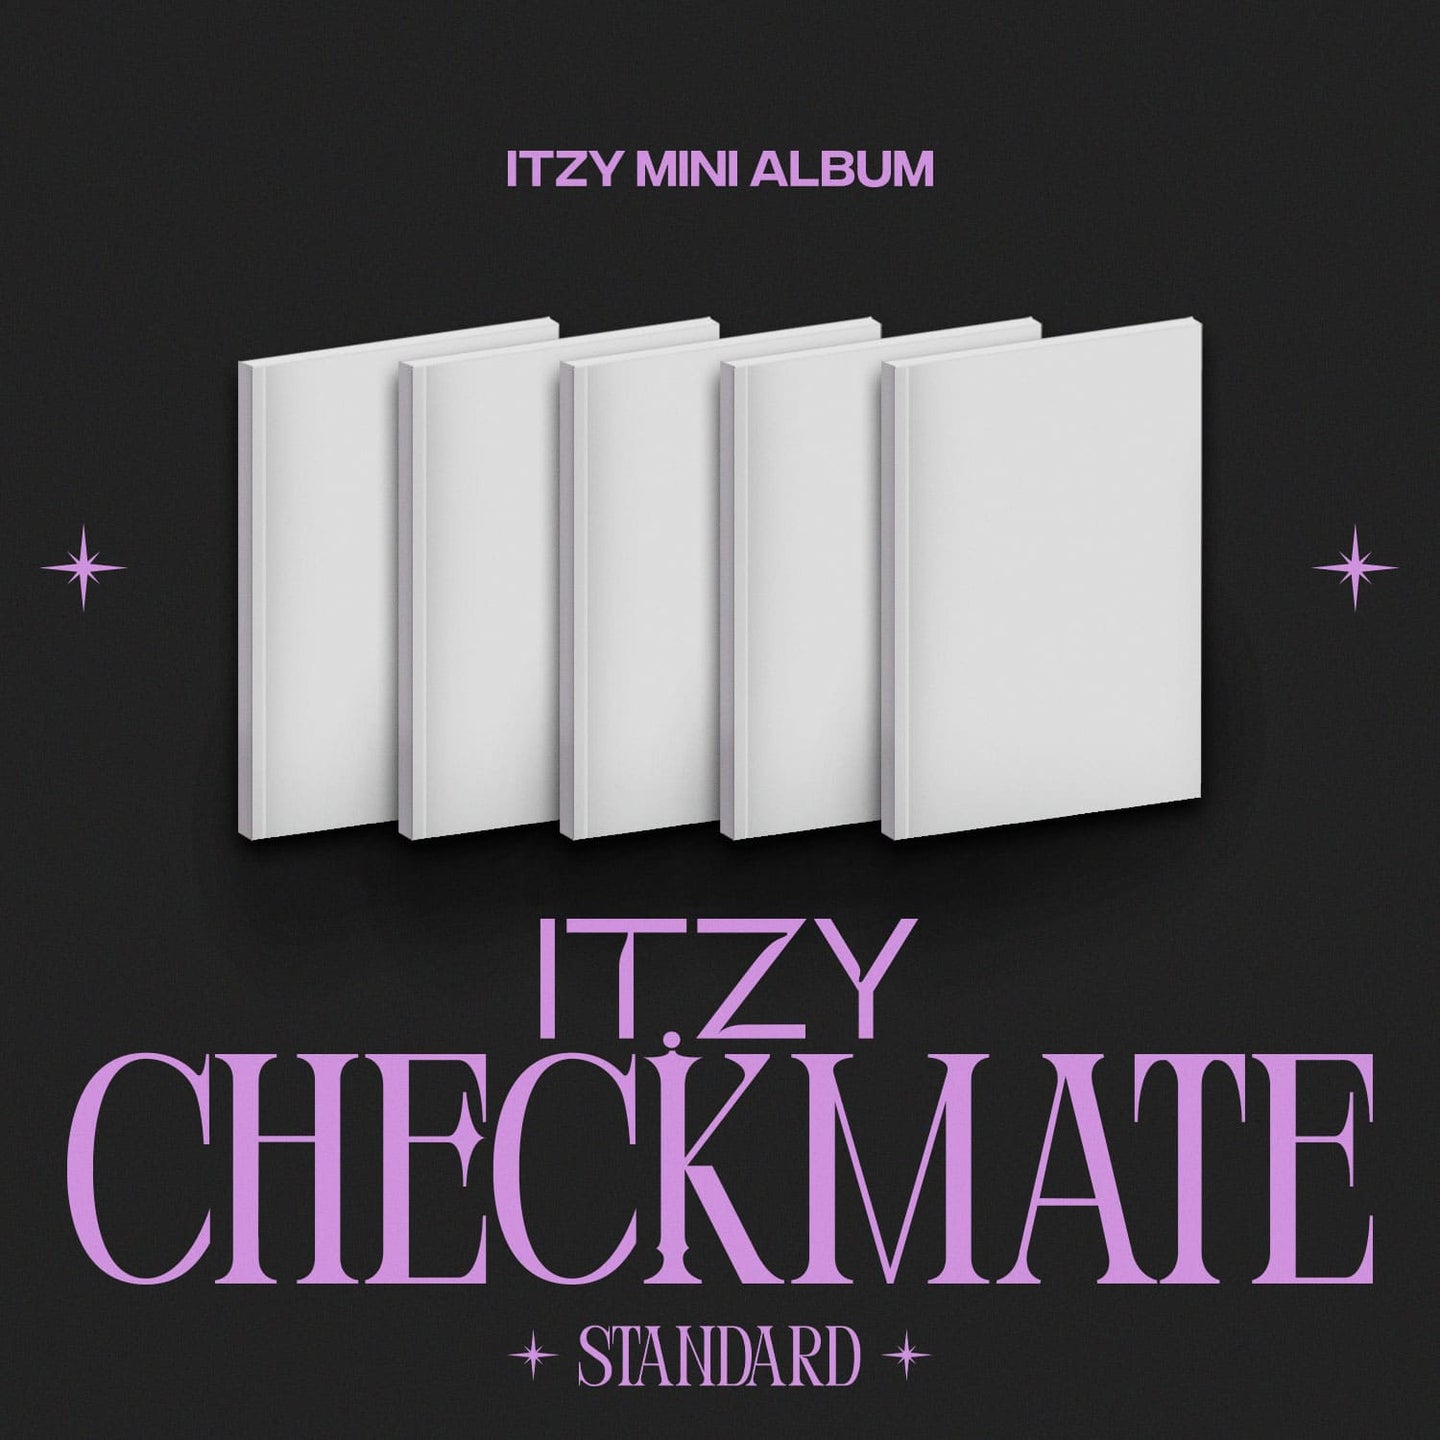 ITZY - CHECKMATE (Standard Edition) (Random)